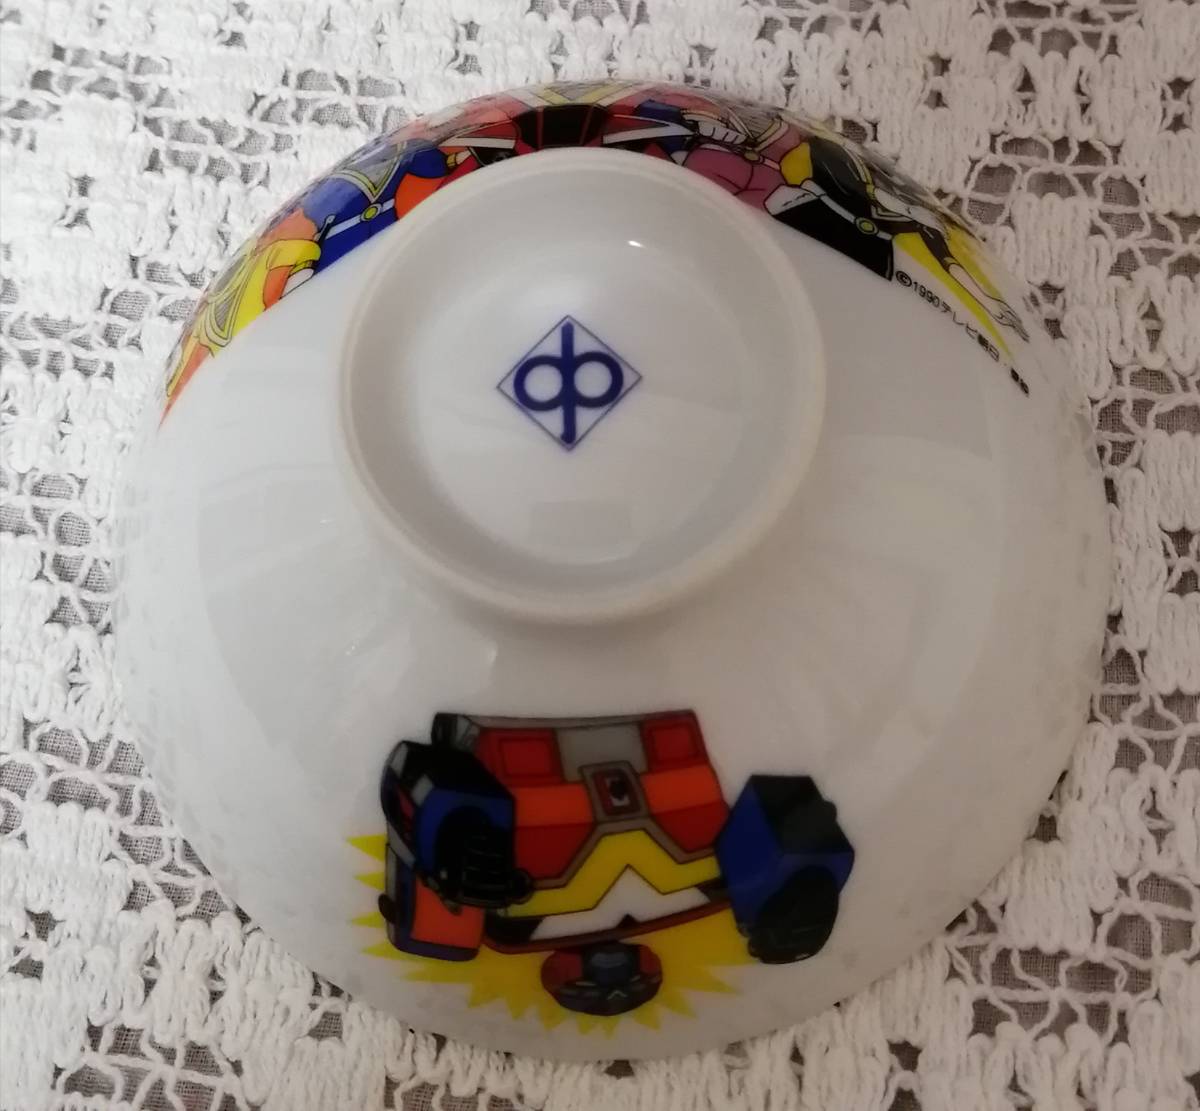  Chikyuu Sentai Fiveman * чай .*1990 год товар *fa.b Robot * посуда * керамика производства * retro 